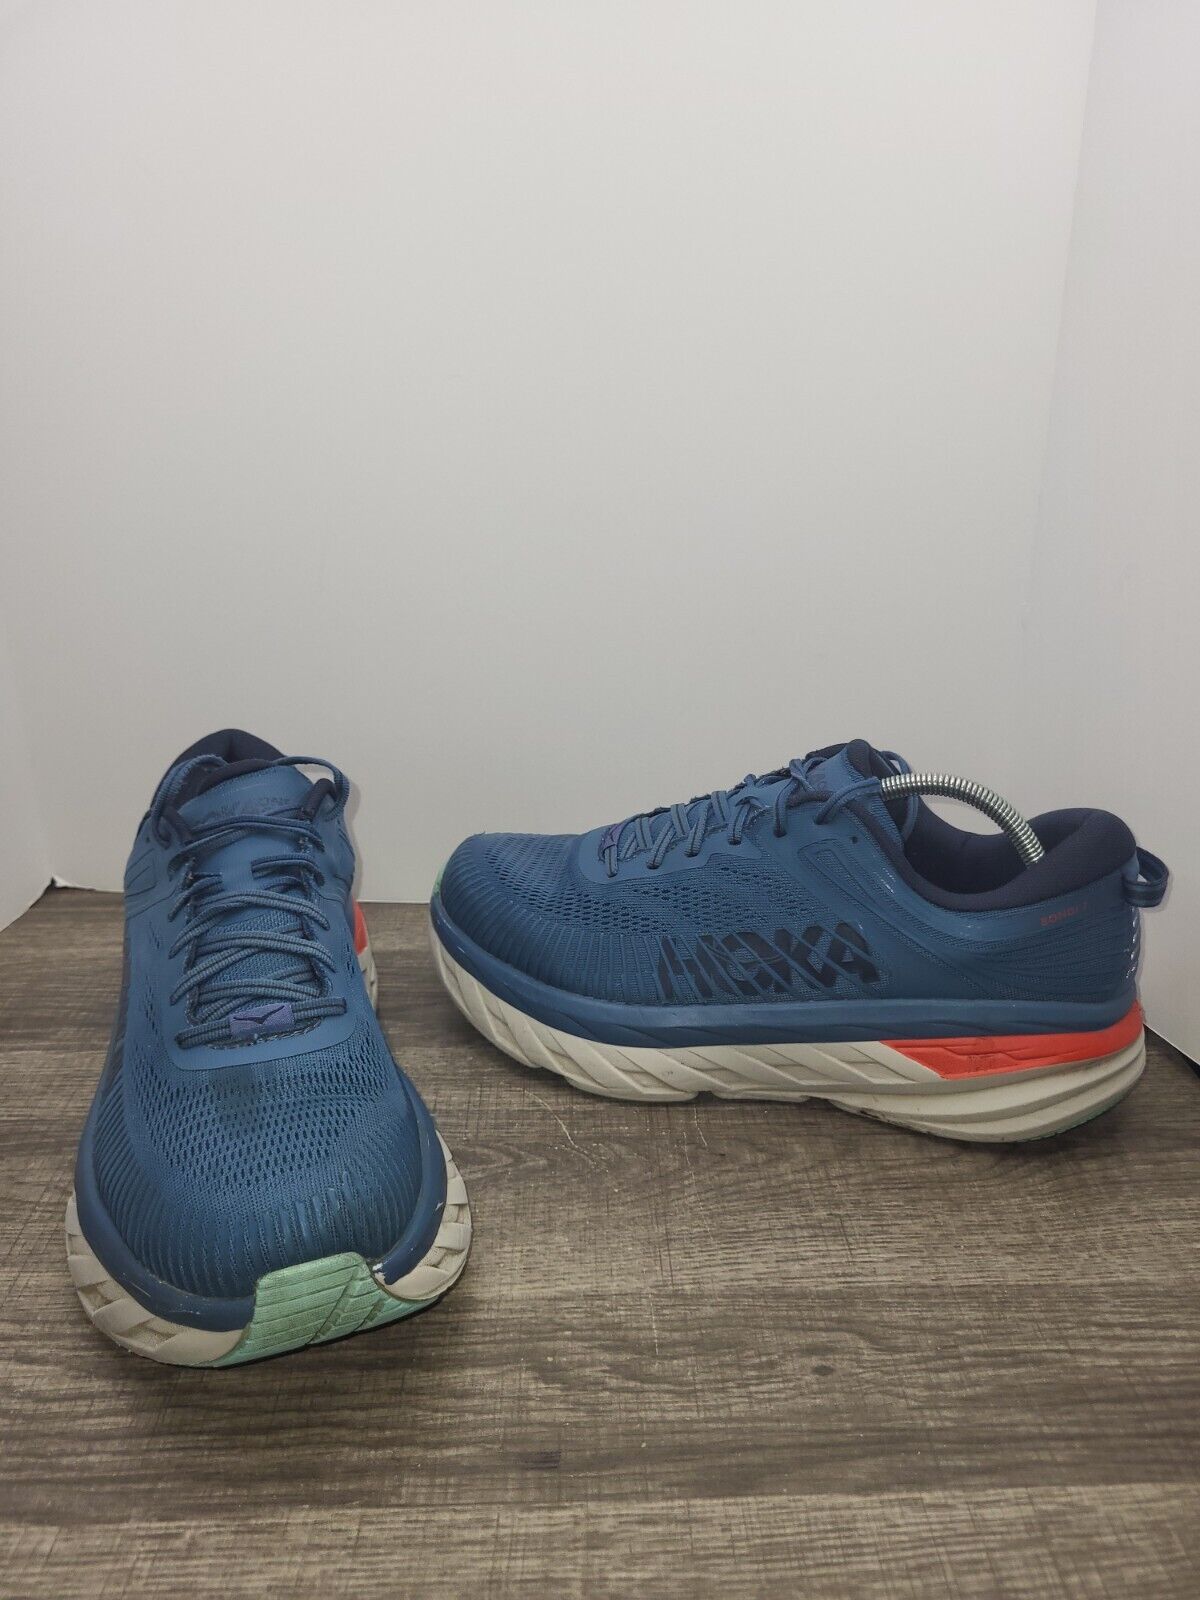 Hoka One One Mens Bondi 7 W 1110530 RTOS Blue Running Shoes Sneakers Size 10.5 E